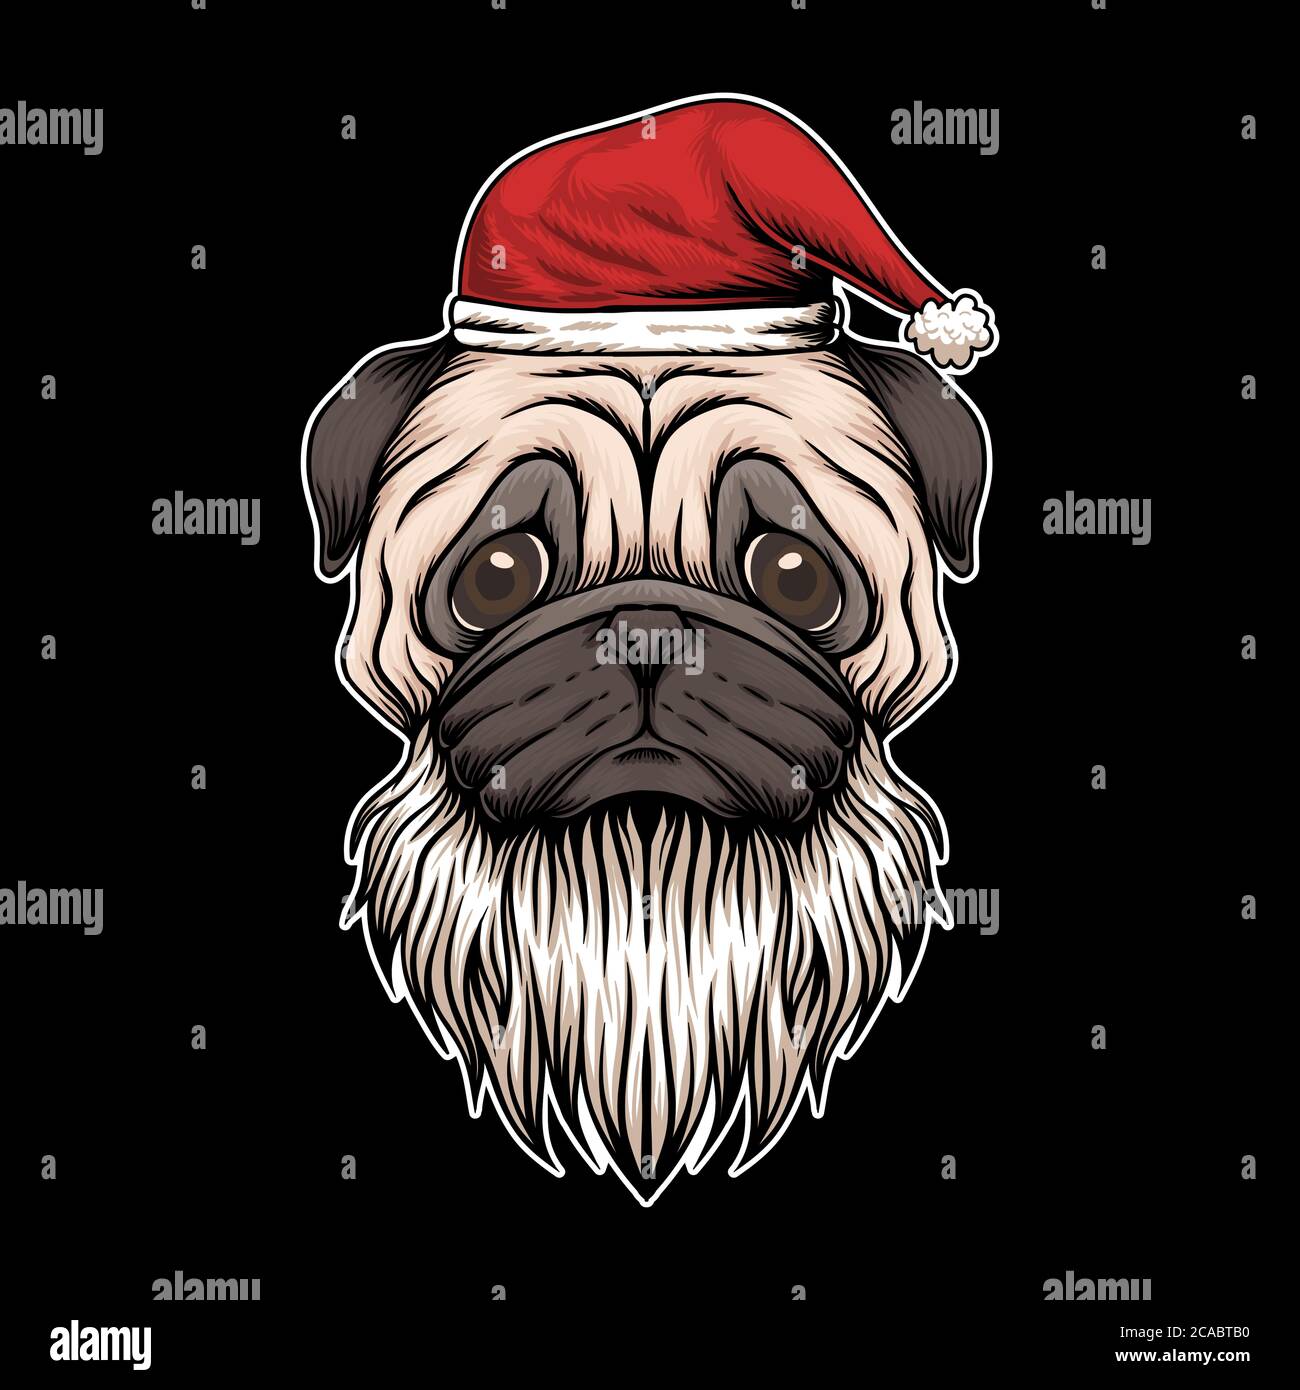 Pug dog hat and beard santa christmas illustration for your company or brand Stock Vector